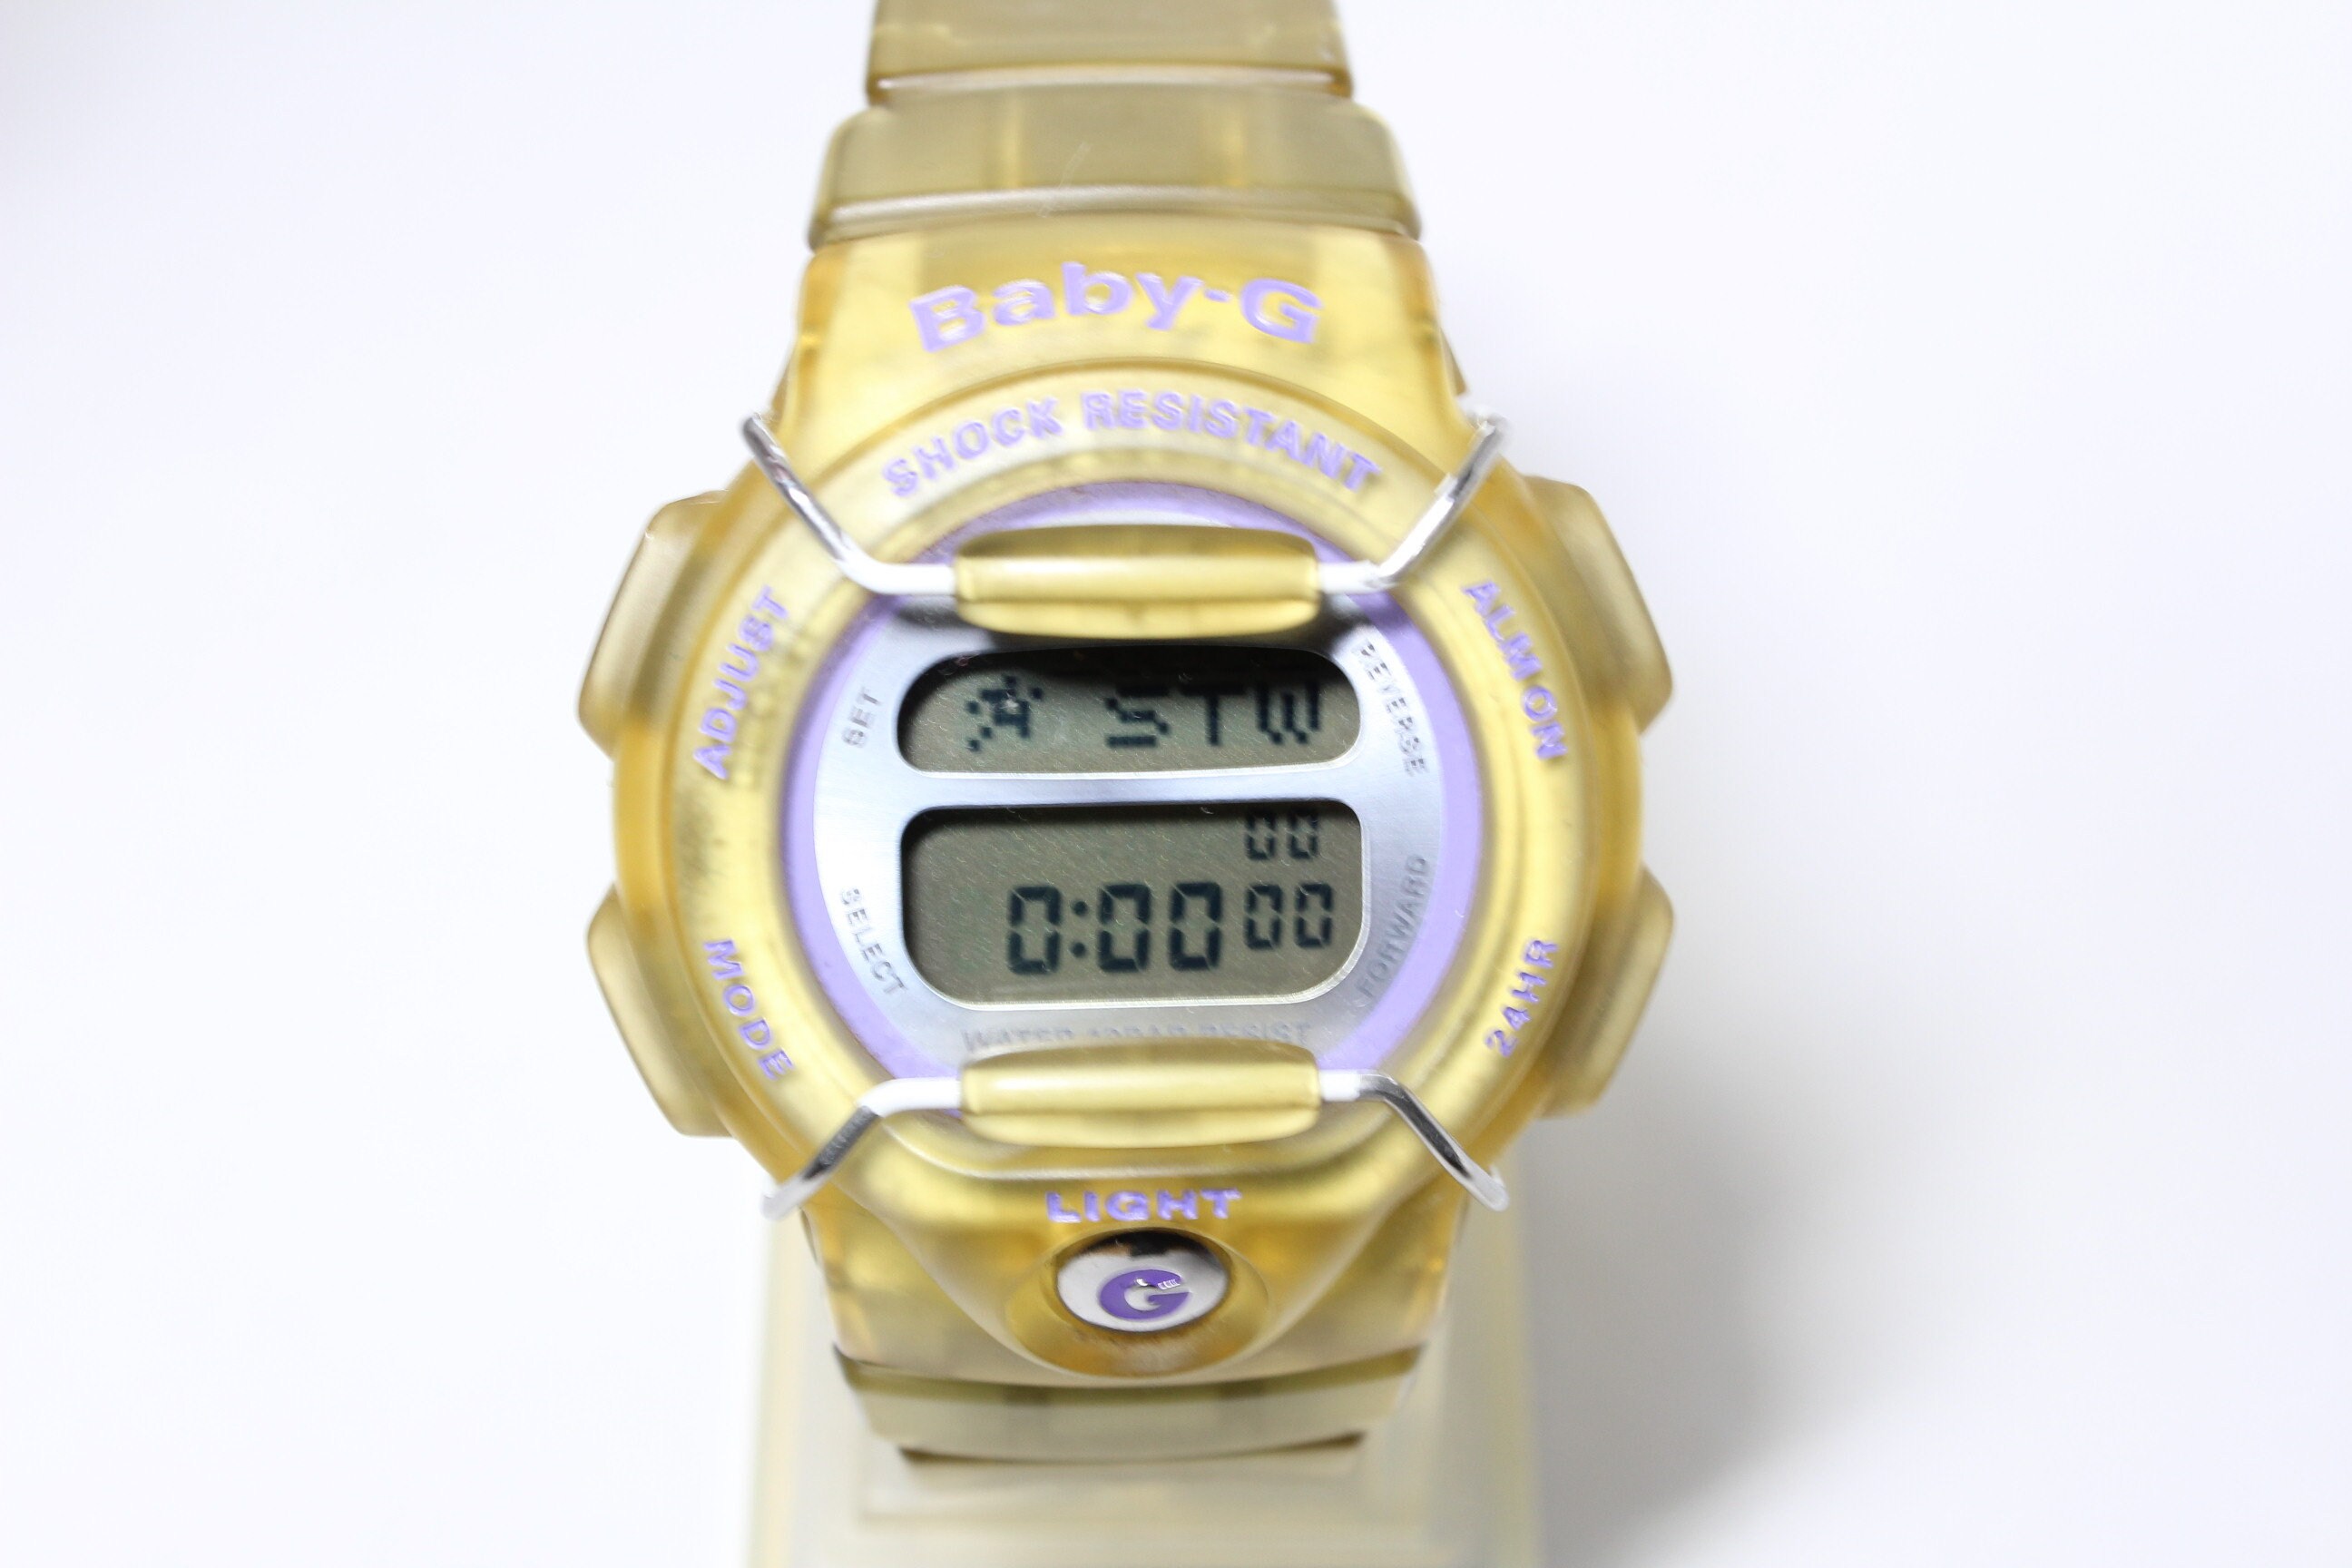 CASIO BG-350 Clear BABY-G Shock Resistant Watch Animation - Etsy Israel